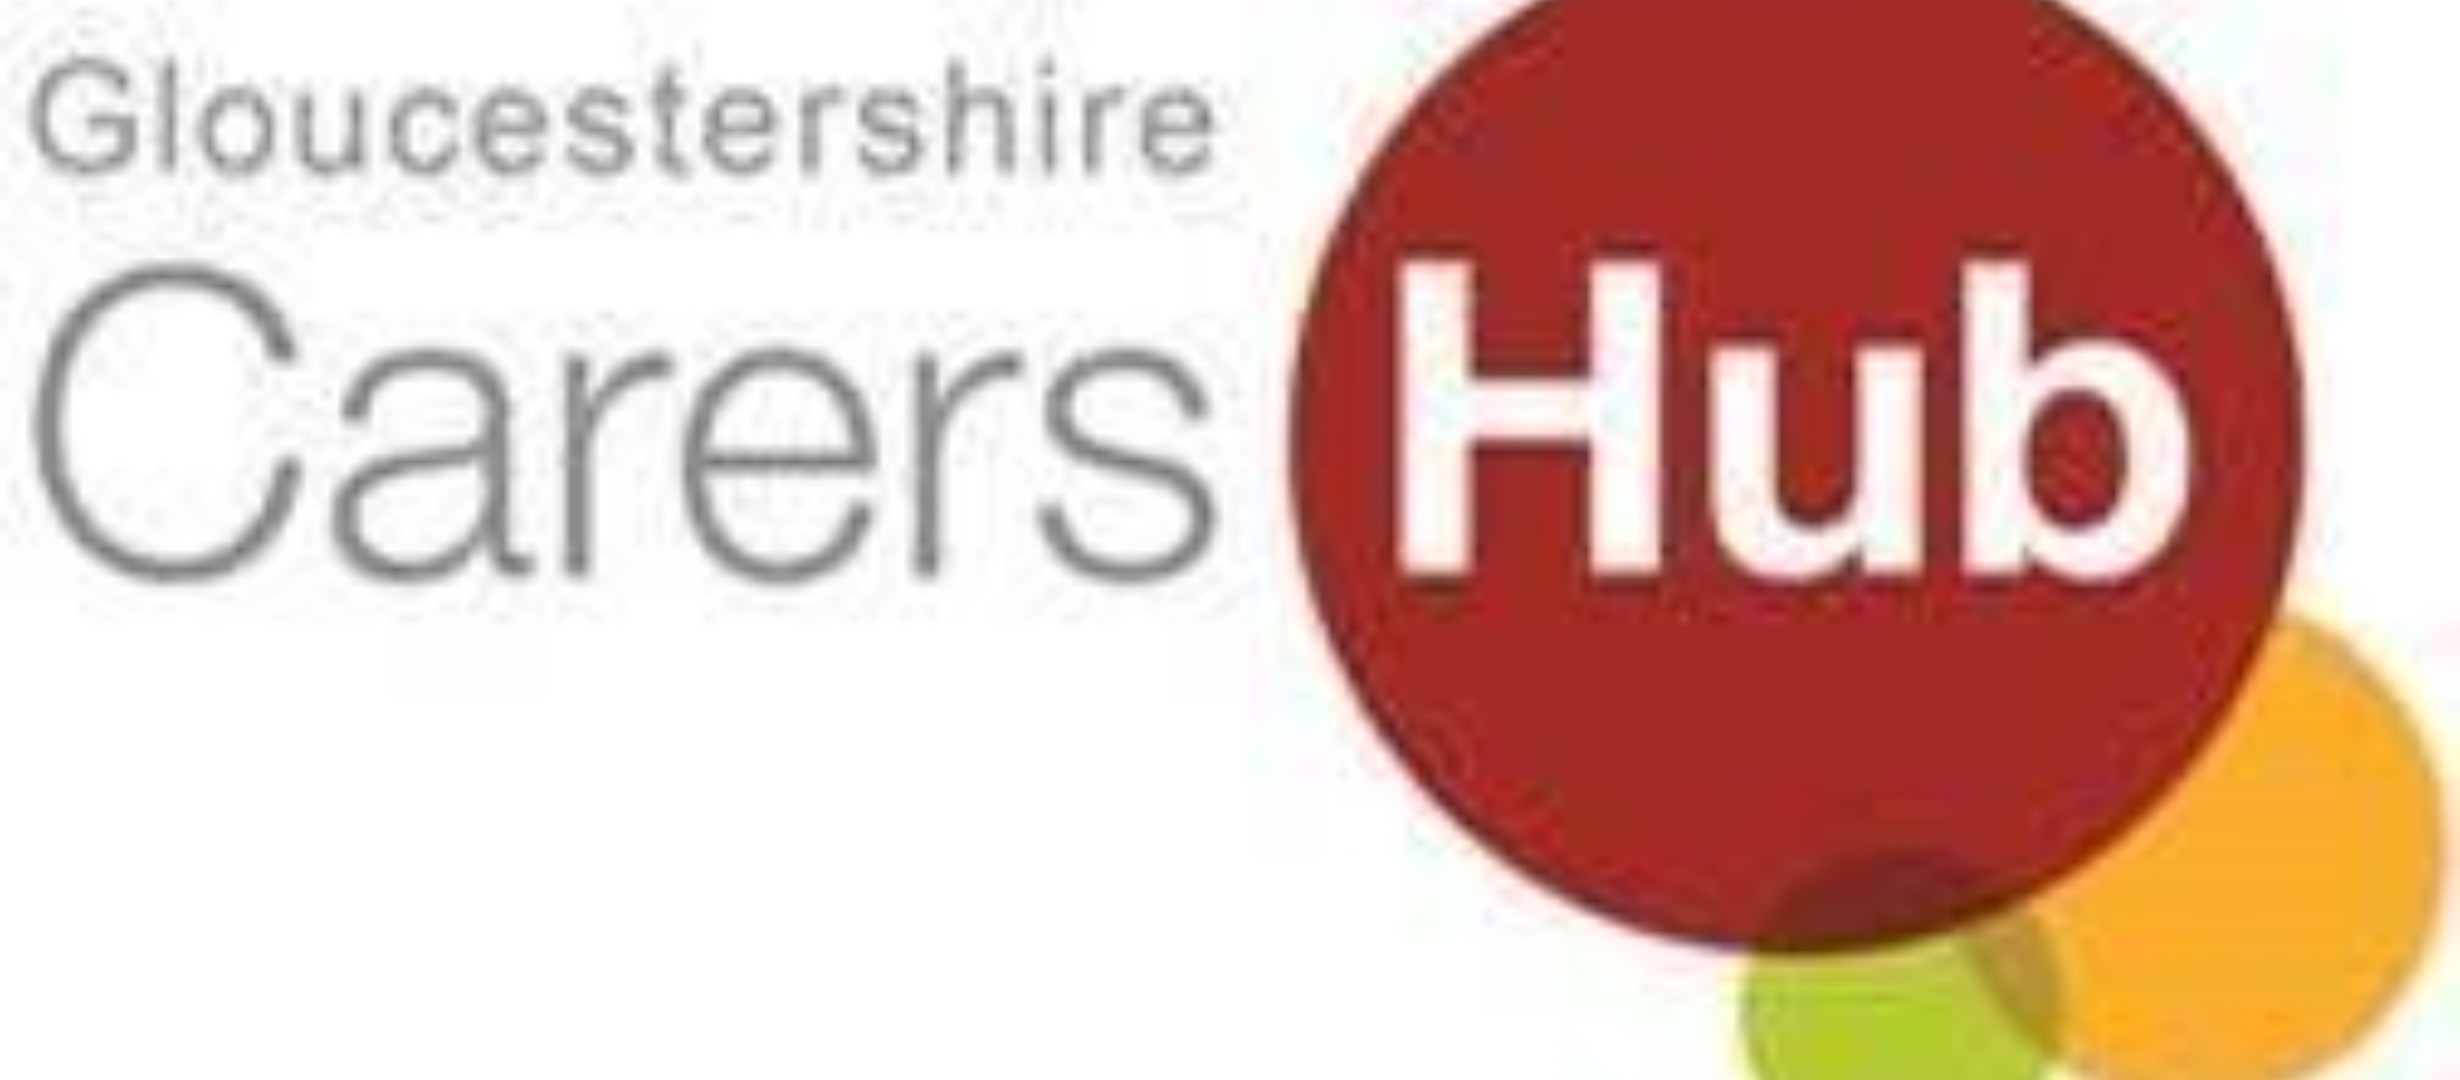 Gloucestershire carers hub logo